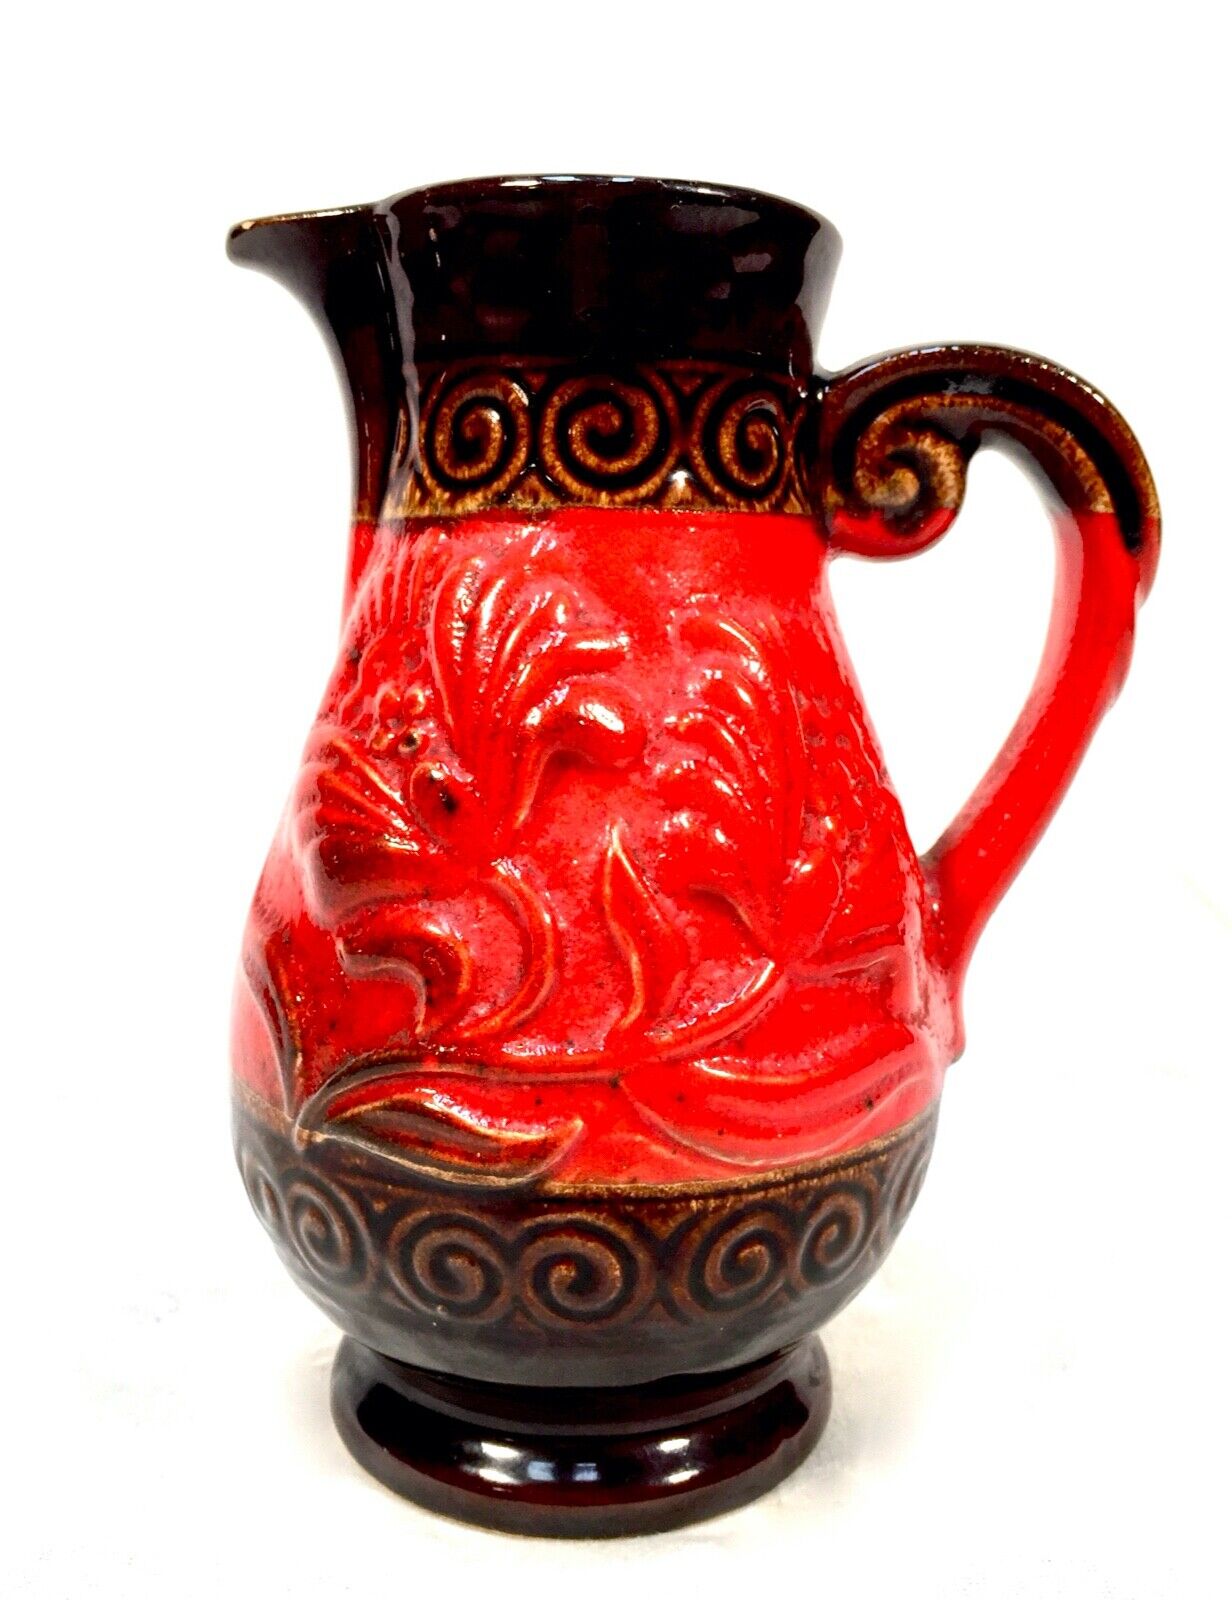 Vintage West German Pottery Bay Vase / Jug / Brown & Red / 1970s Retro